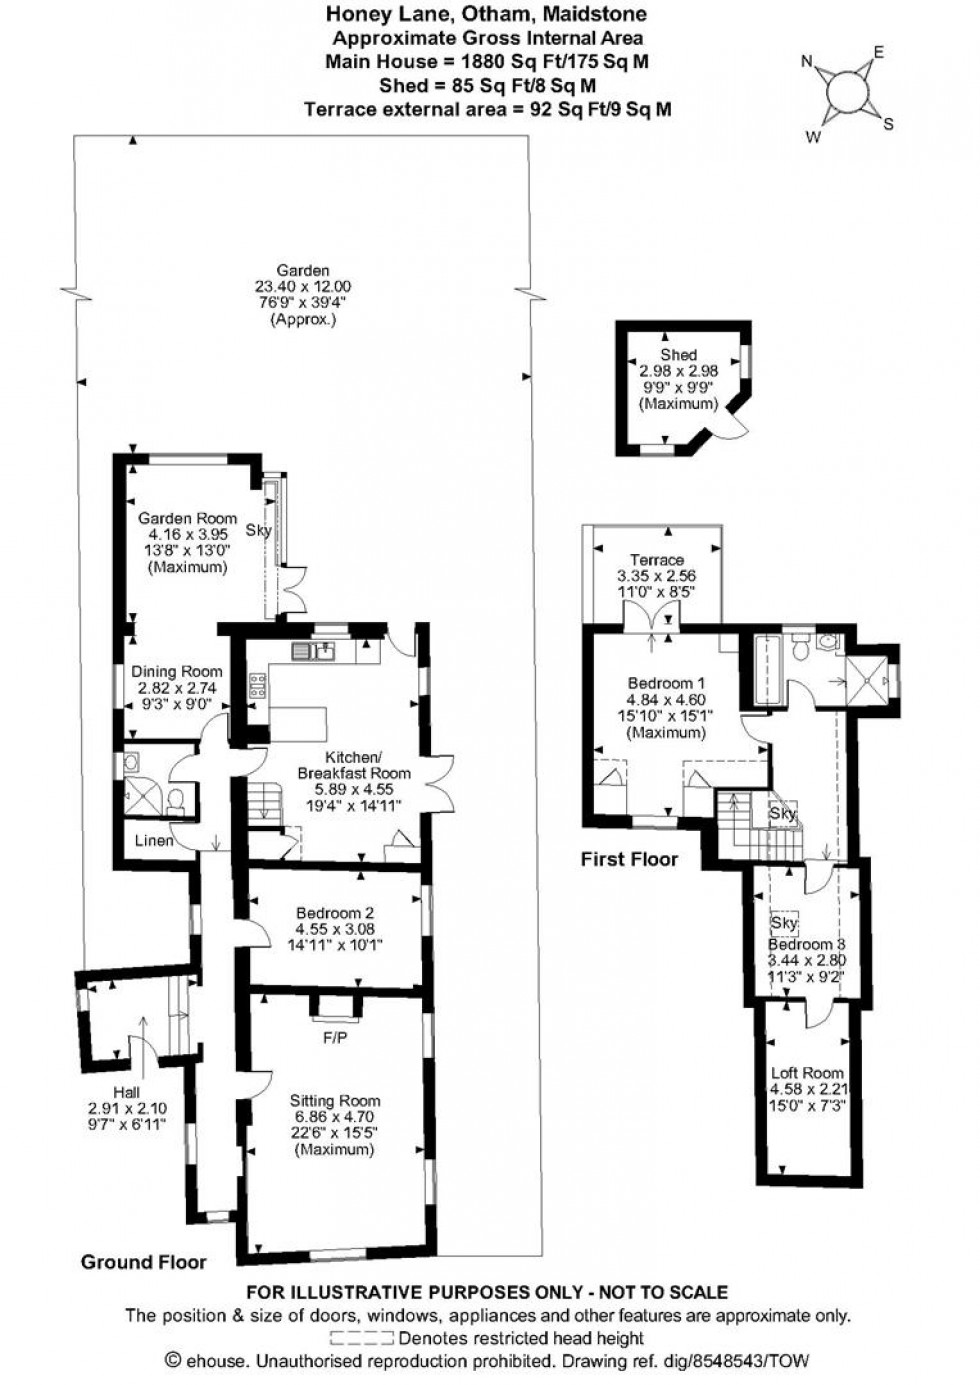 Floorplan for Honey Lane, Otham, Maidstone